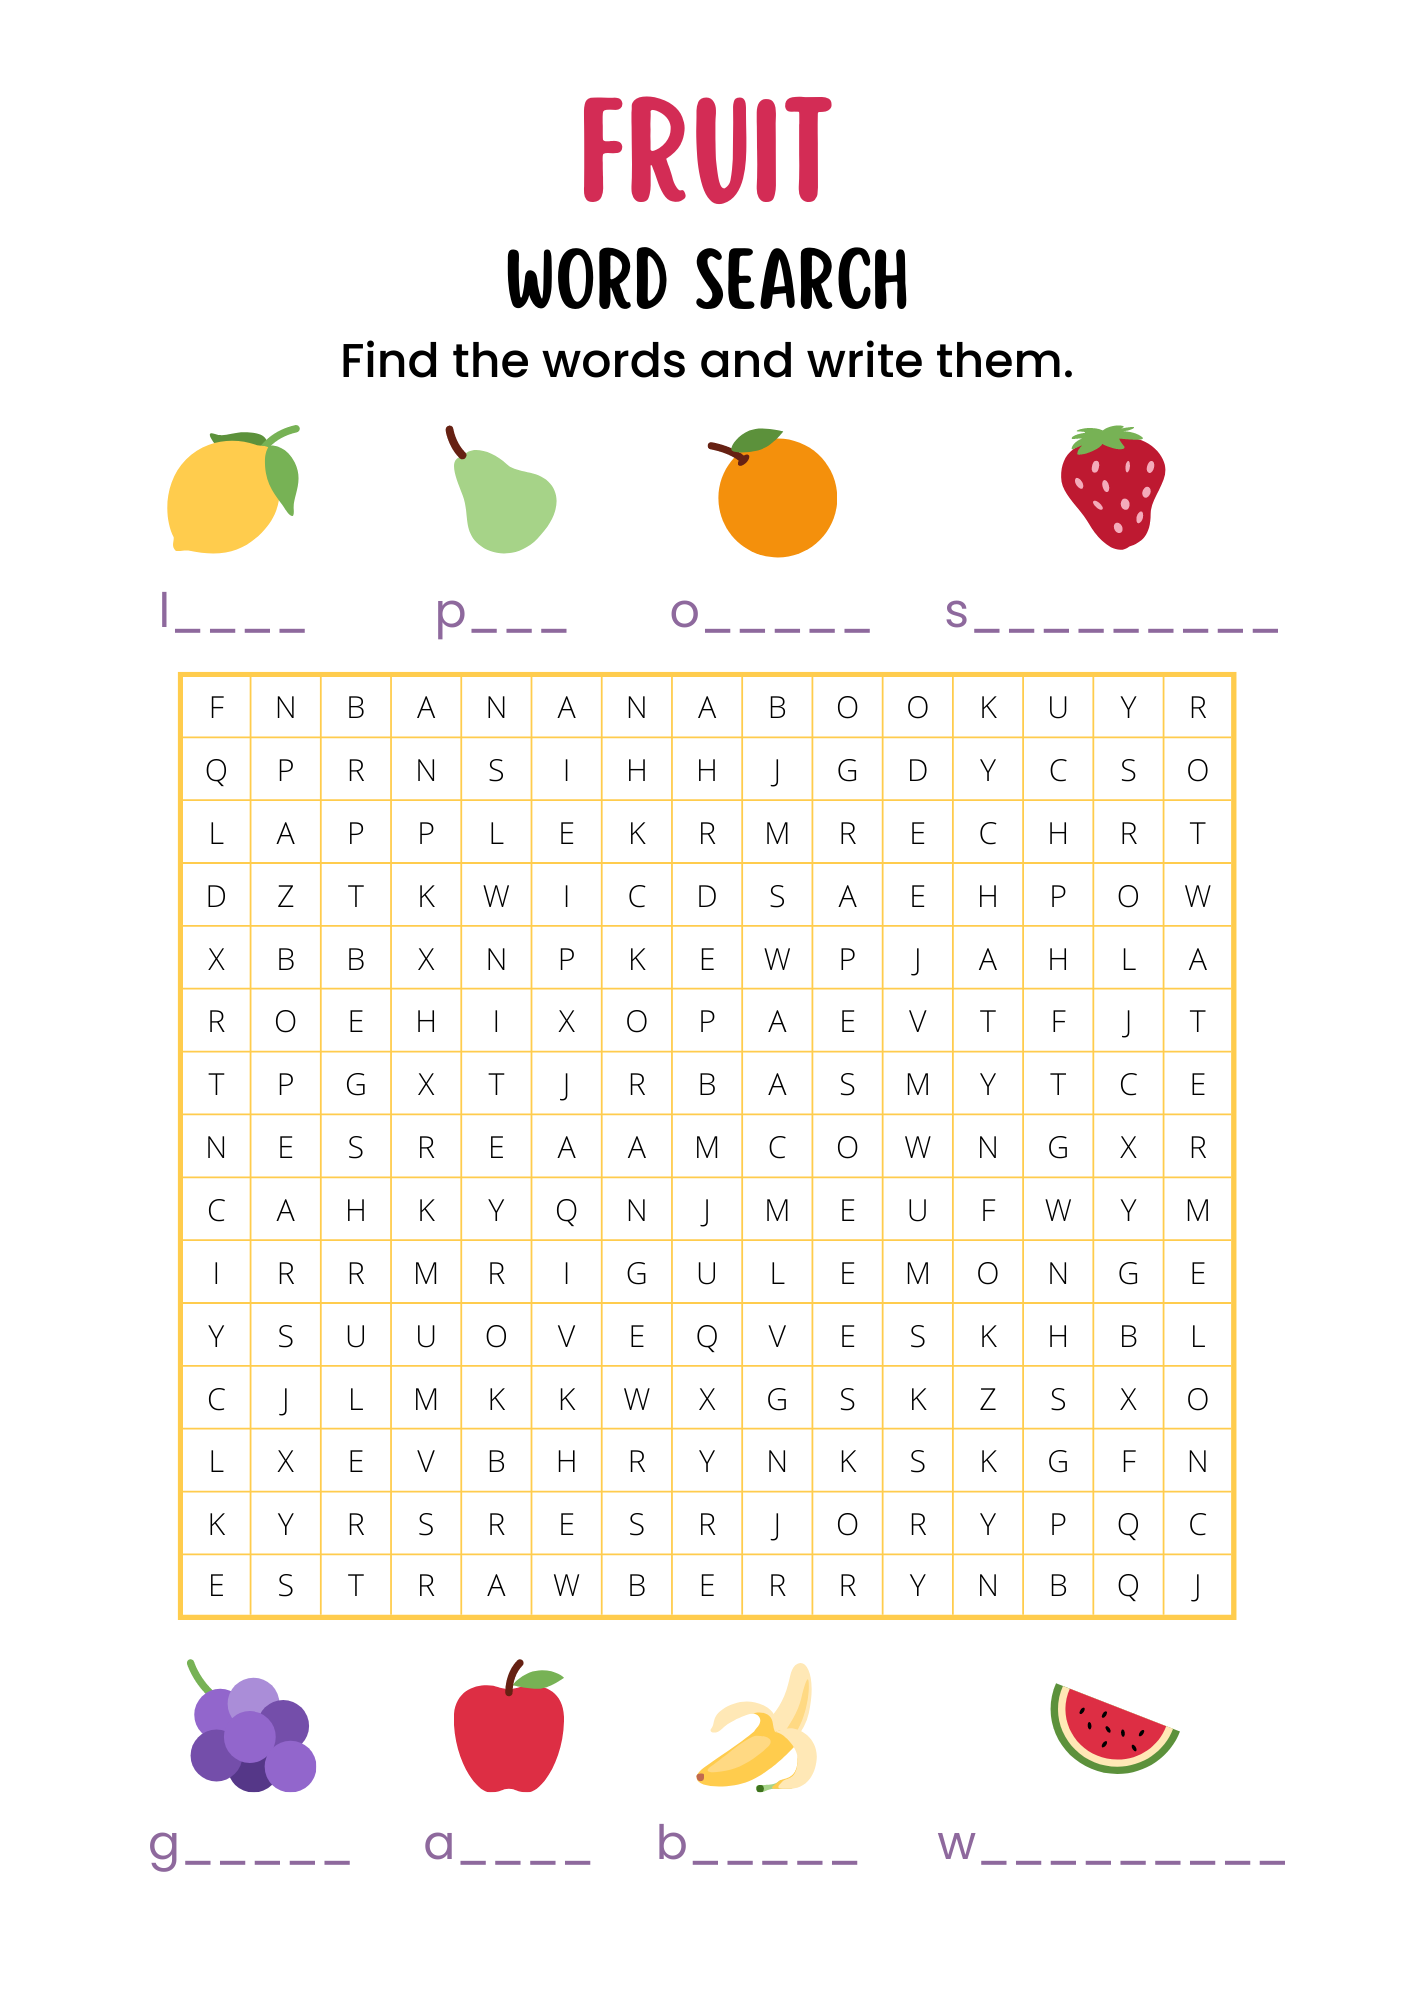 Fruit Wordsearch Worksheet